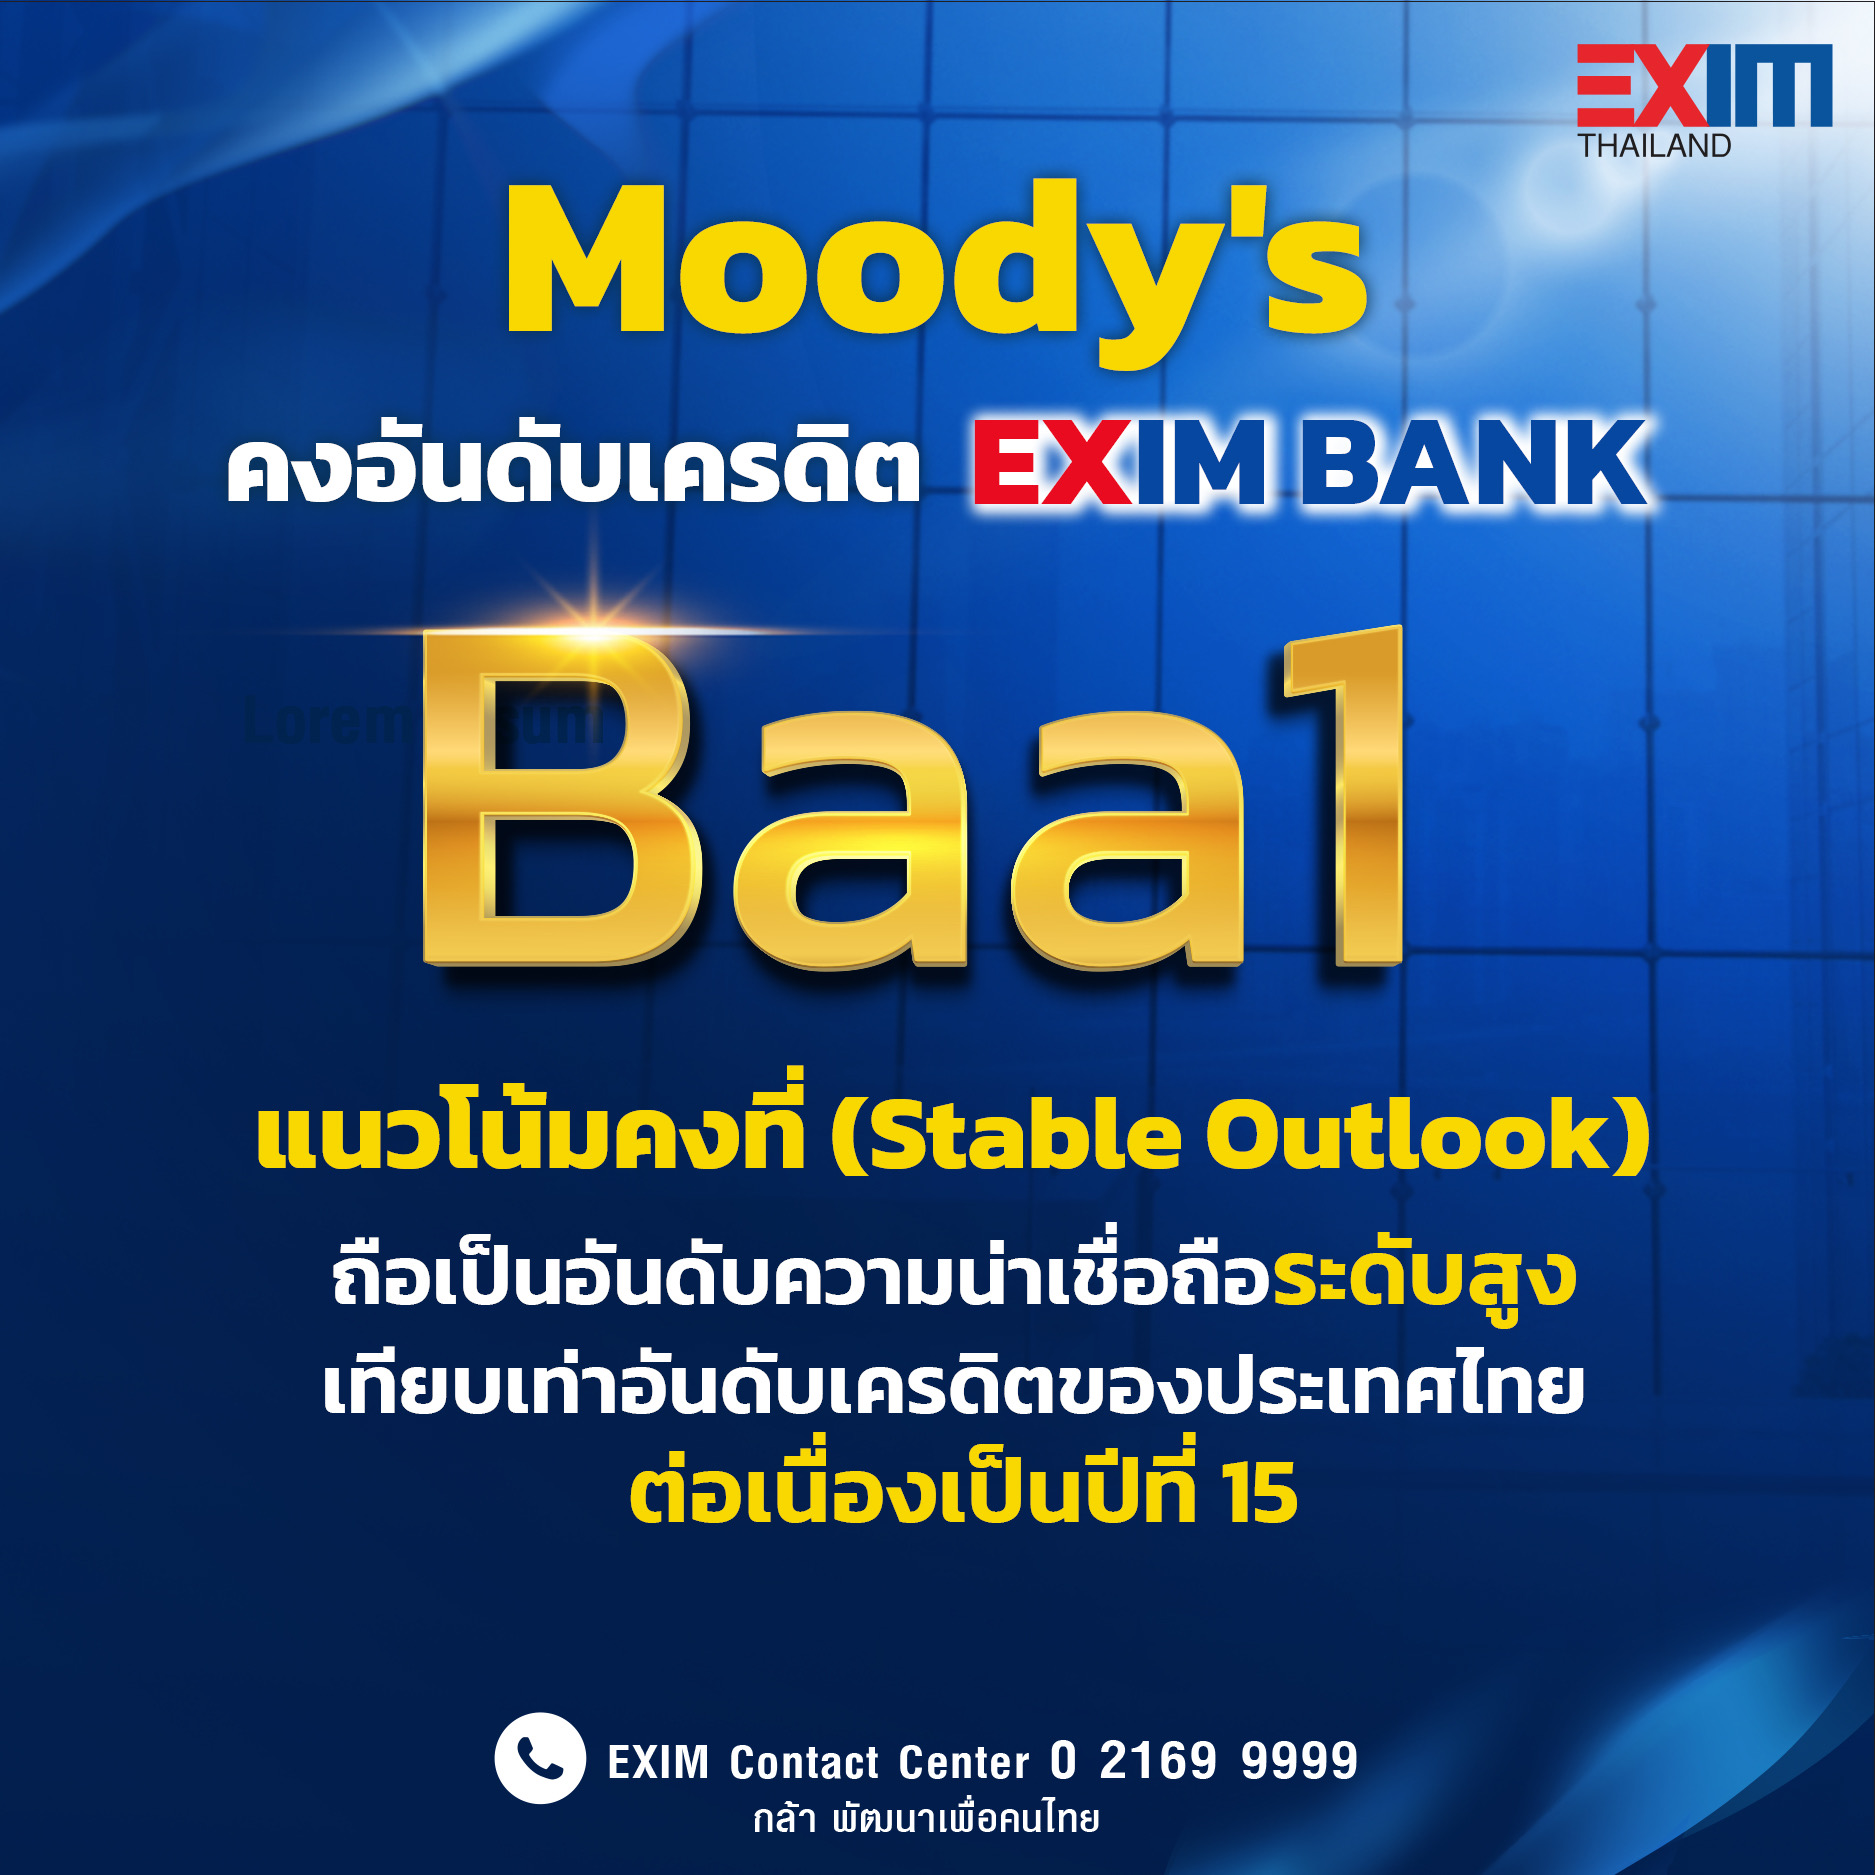 EXIM BANK ได้รับการคงอันดับเครดิตสากลที่ Baa1 (Stable Outlook) จาก Moody’s เทียบเท่าอันดับเครดิตของประเทศไทย ต่อเนื่องเป็นปีที่ 15